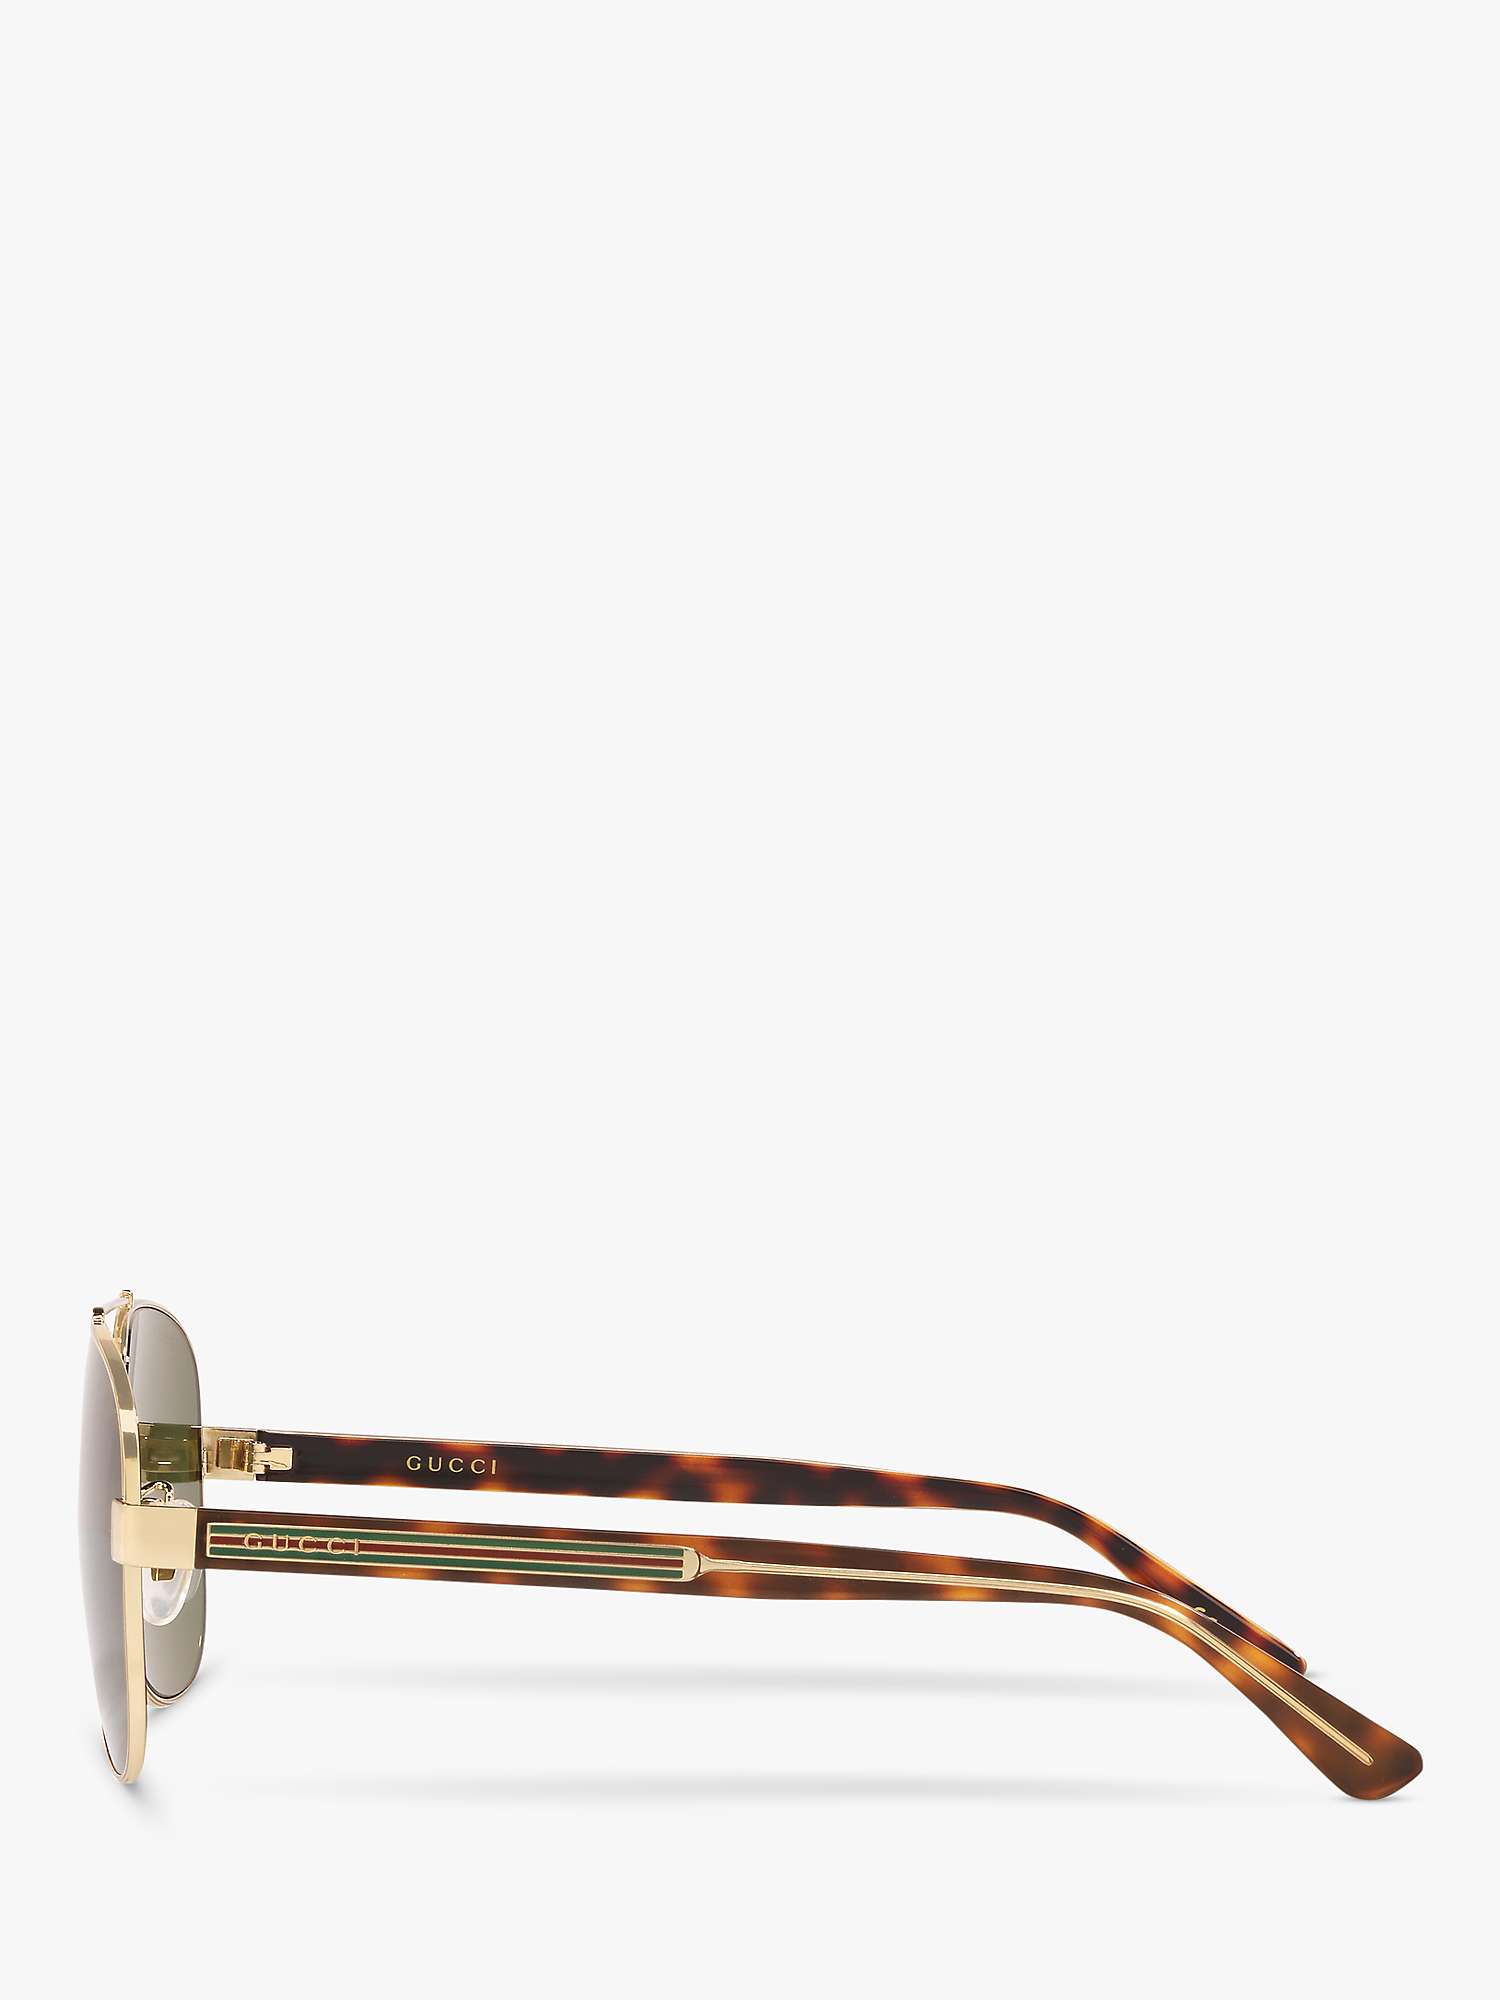 Buy Gucci GC001244 Men's Aviator Sunglasses, Gold/Green Online at johnlewis.com